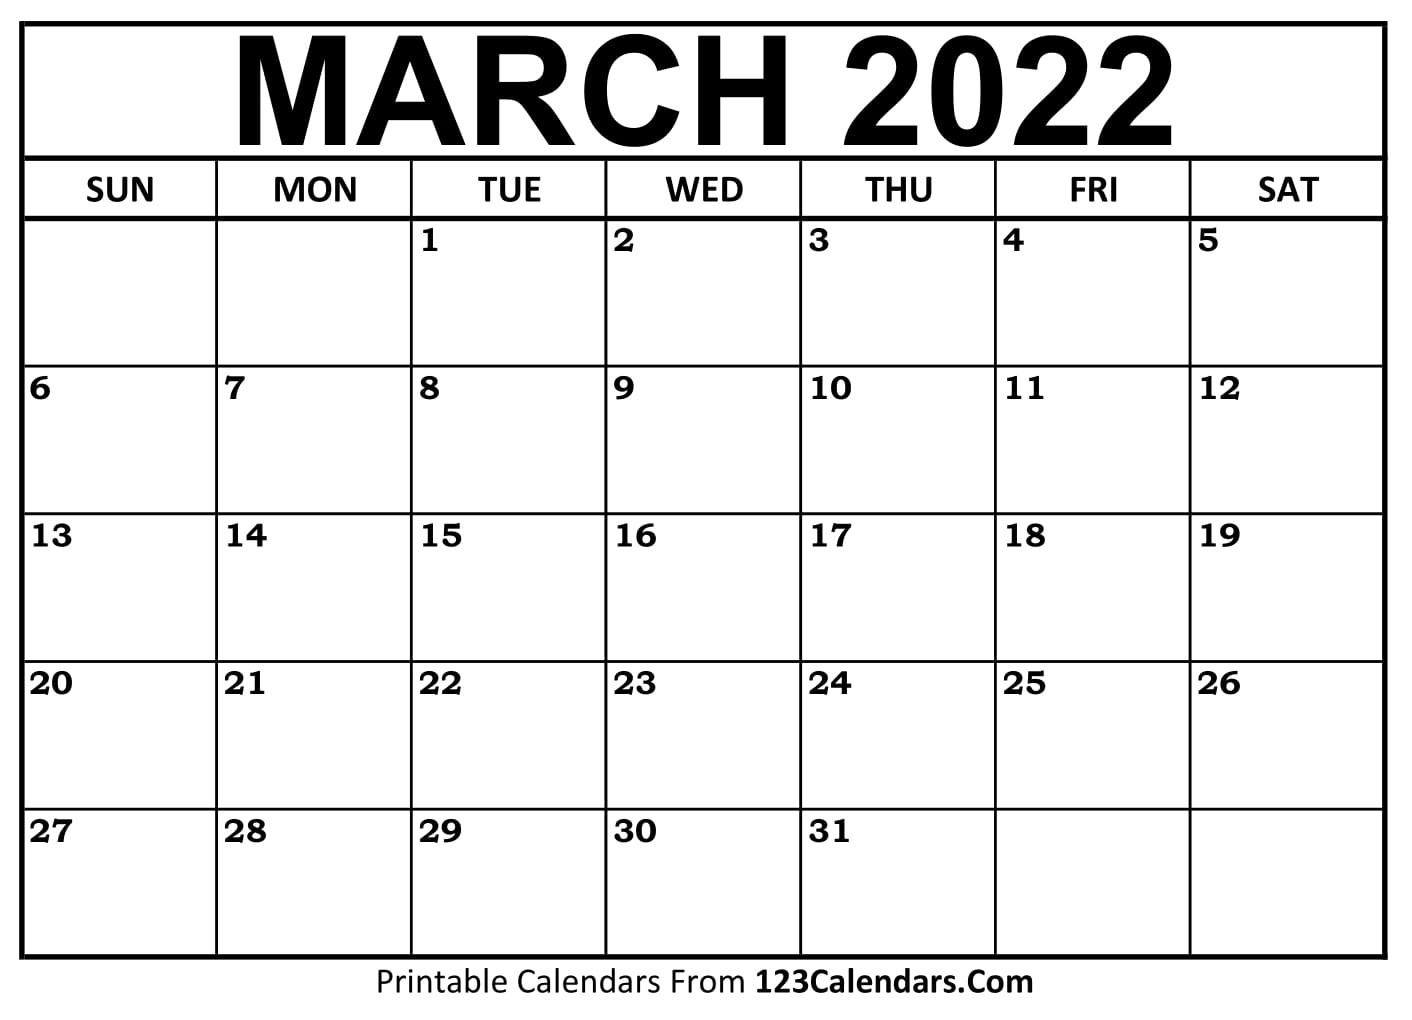 Mar 2022 Calendar Printable Printable March 2022 Calendar Templates - 123Calendars.com